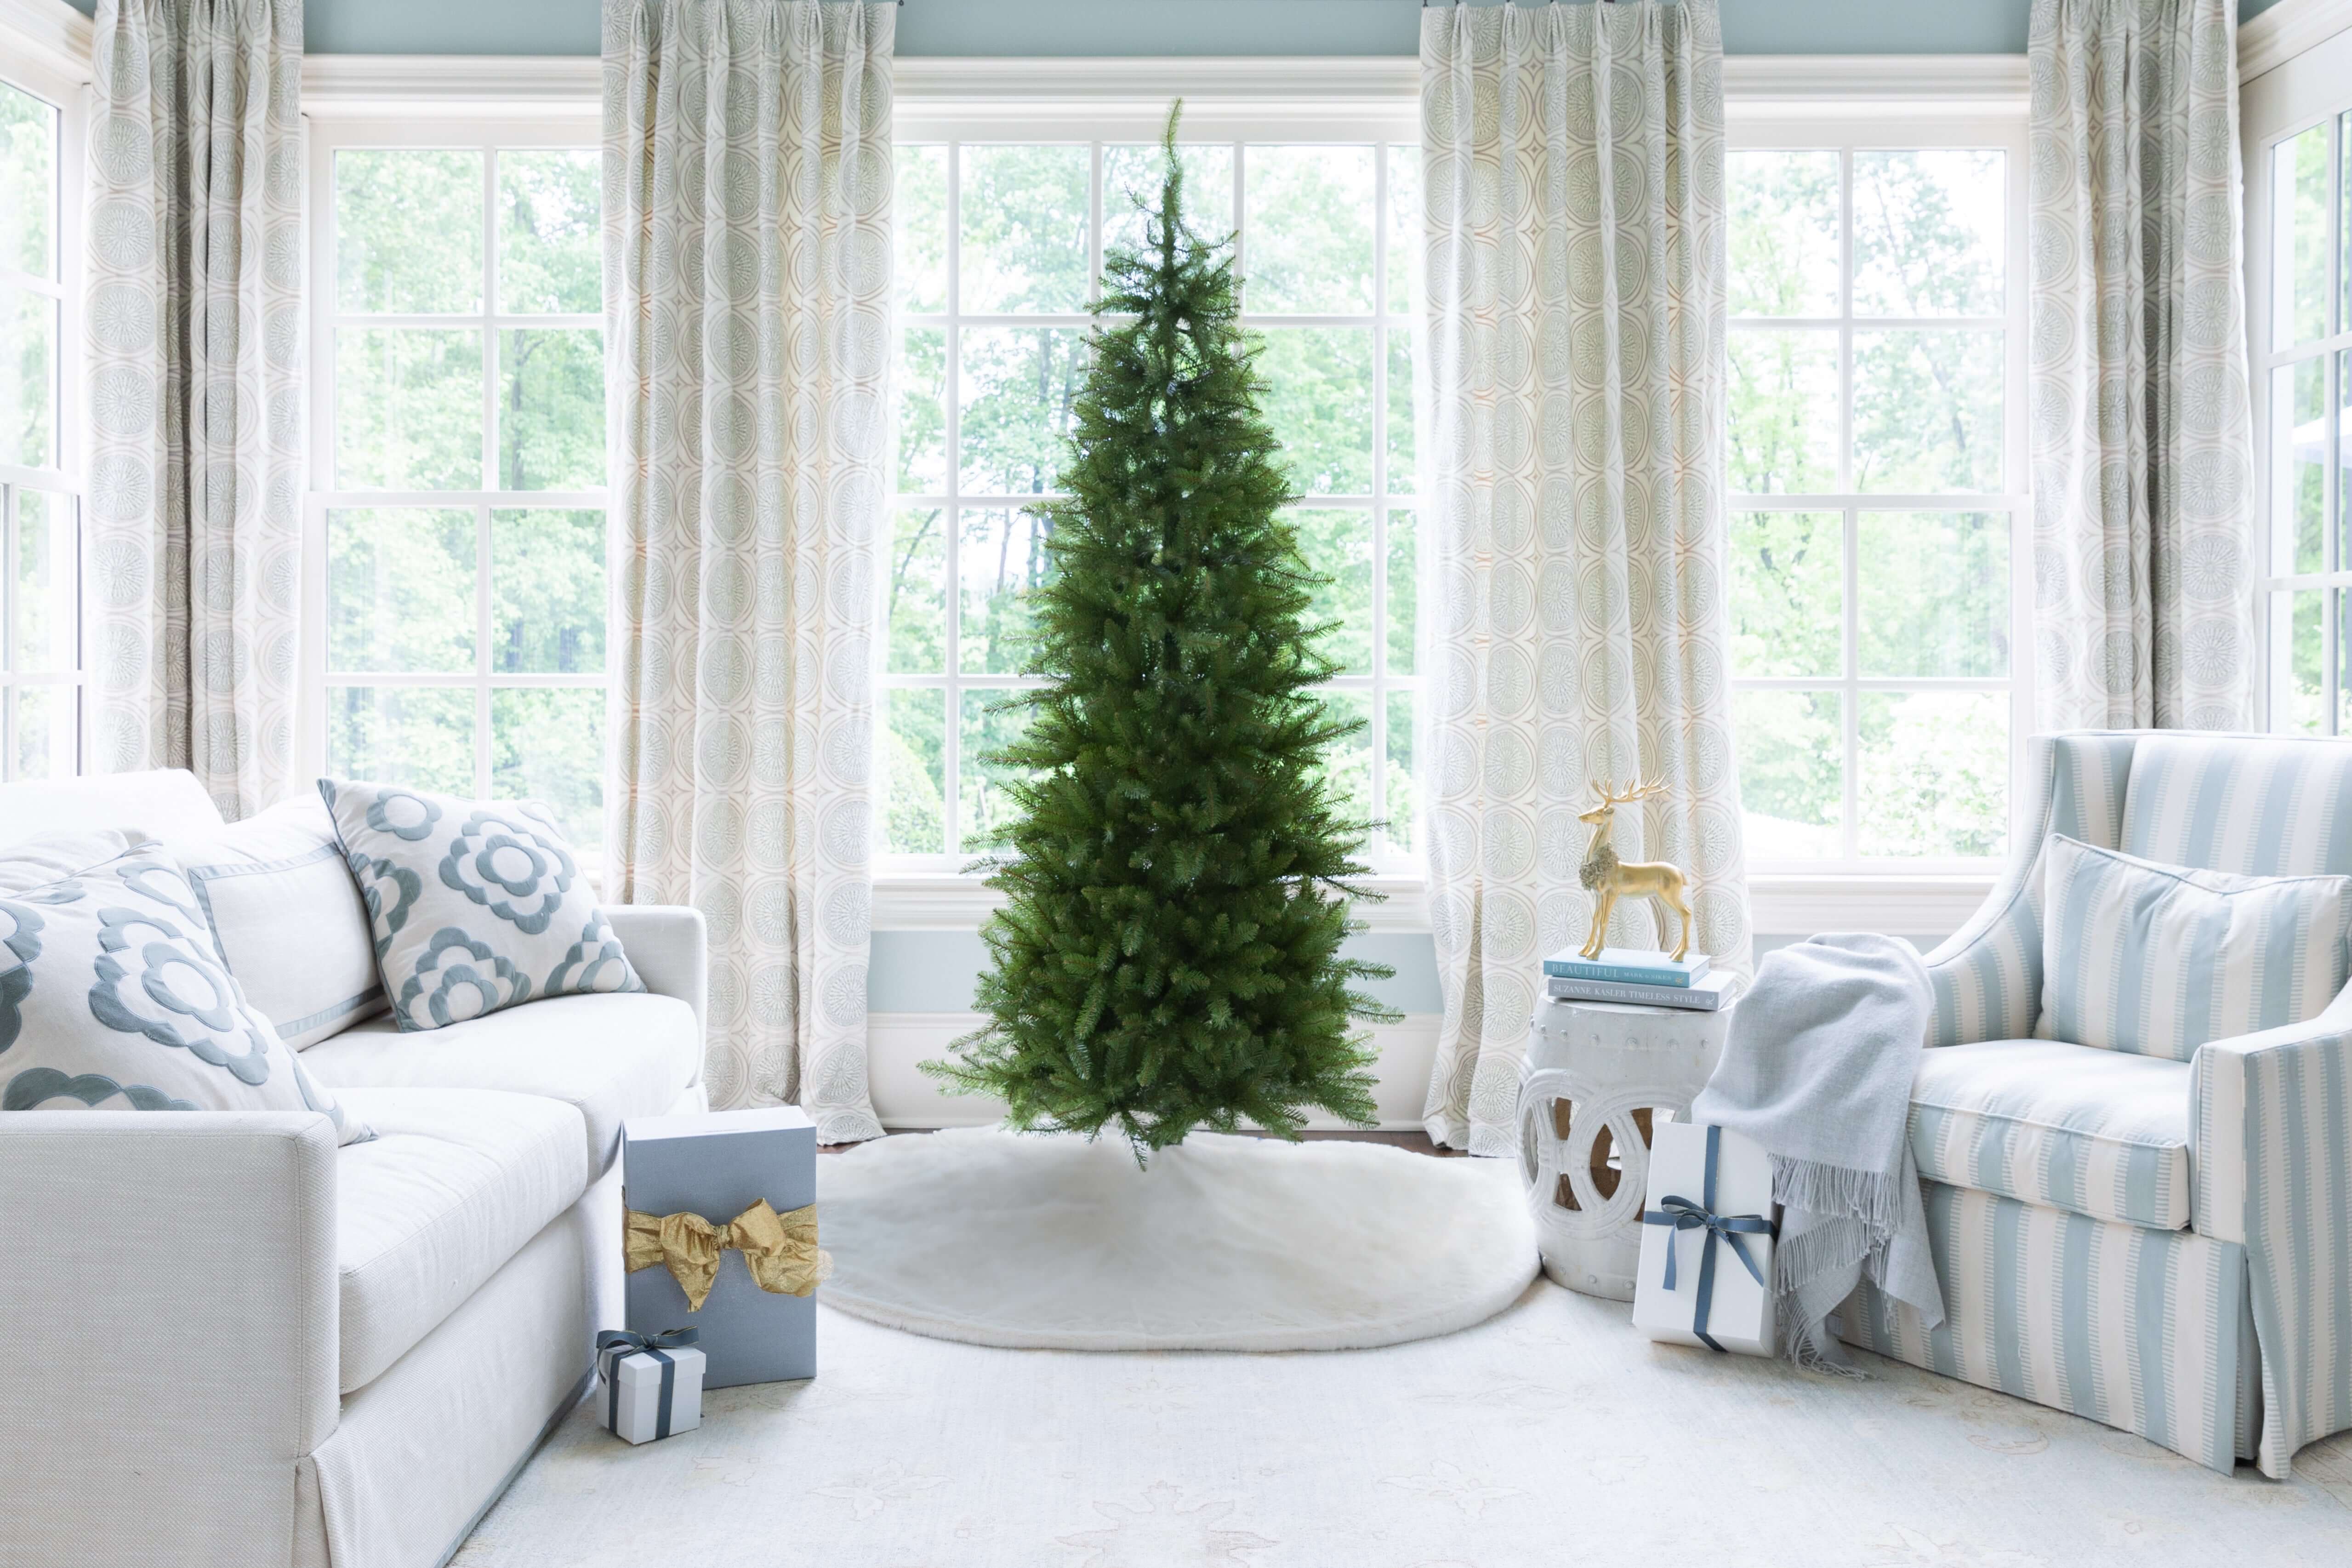 King of Christmas 6.5' Yorkshire Fir Slim Artificial Christmas Tree Unlit